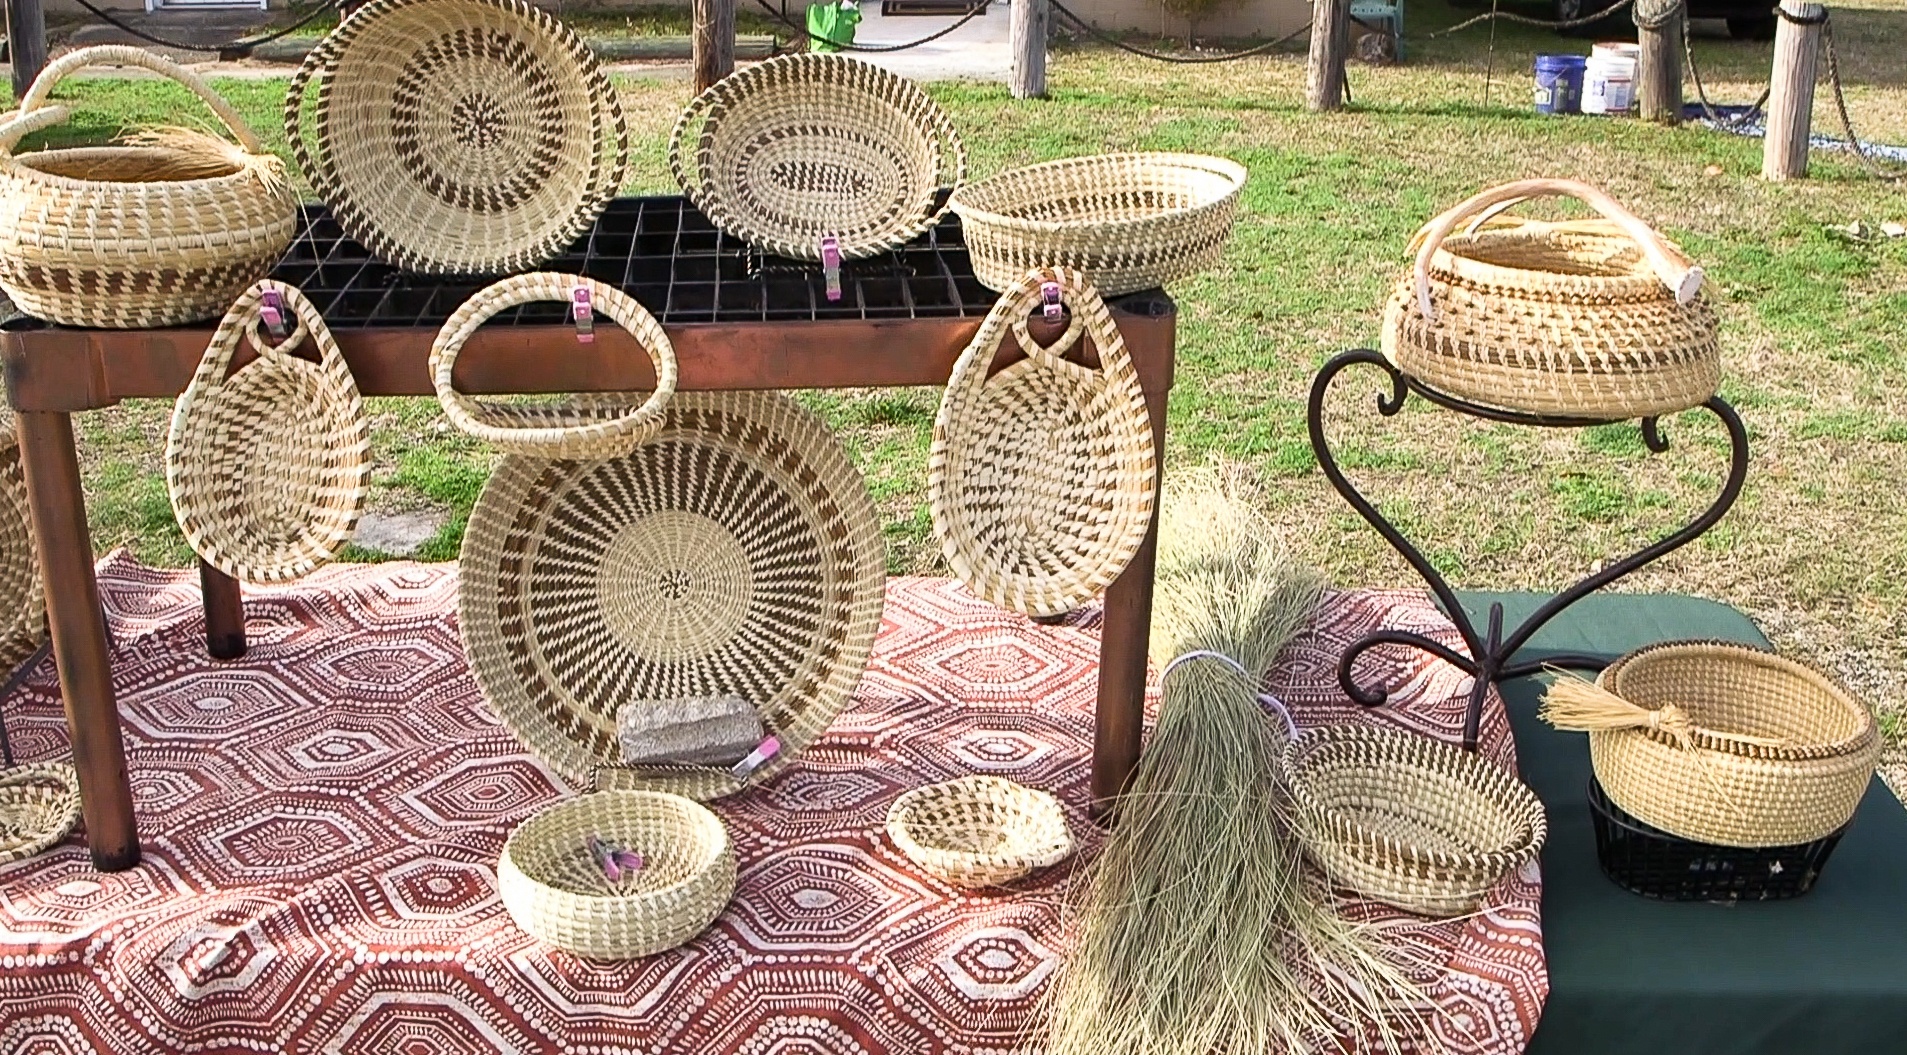 Still of Georgette Sanders' sweetgrass baskets outside of her studio in Mount Pleasant, South Carolina. Feb. 2022